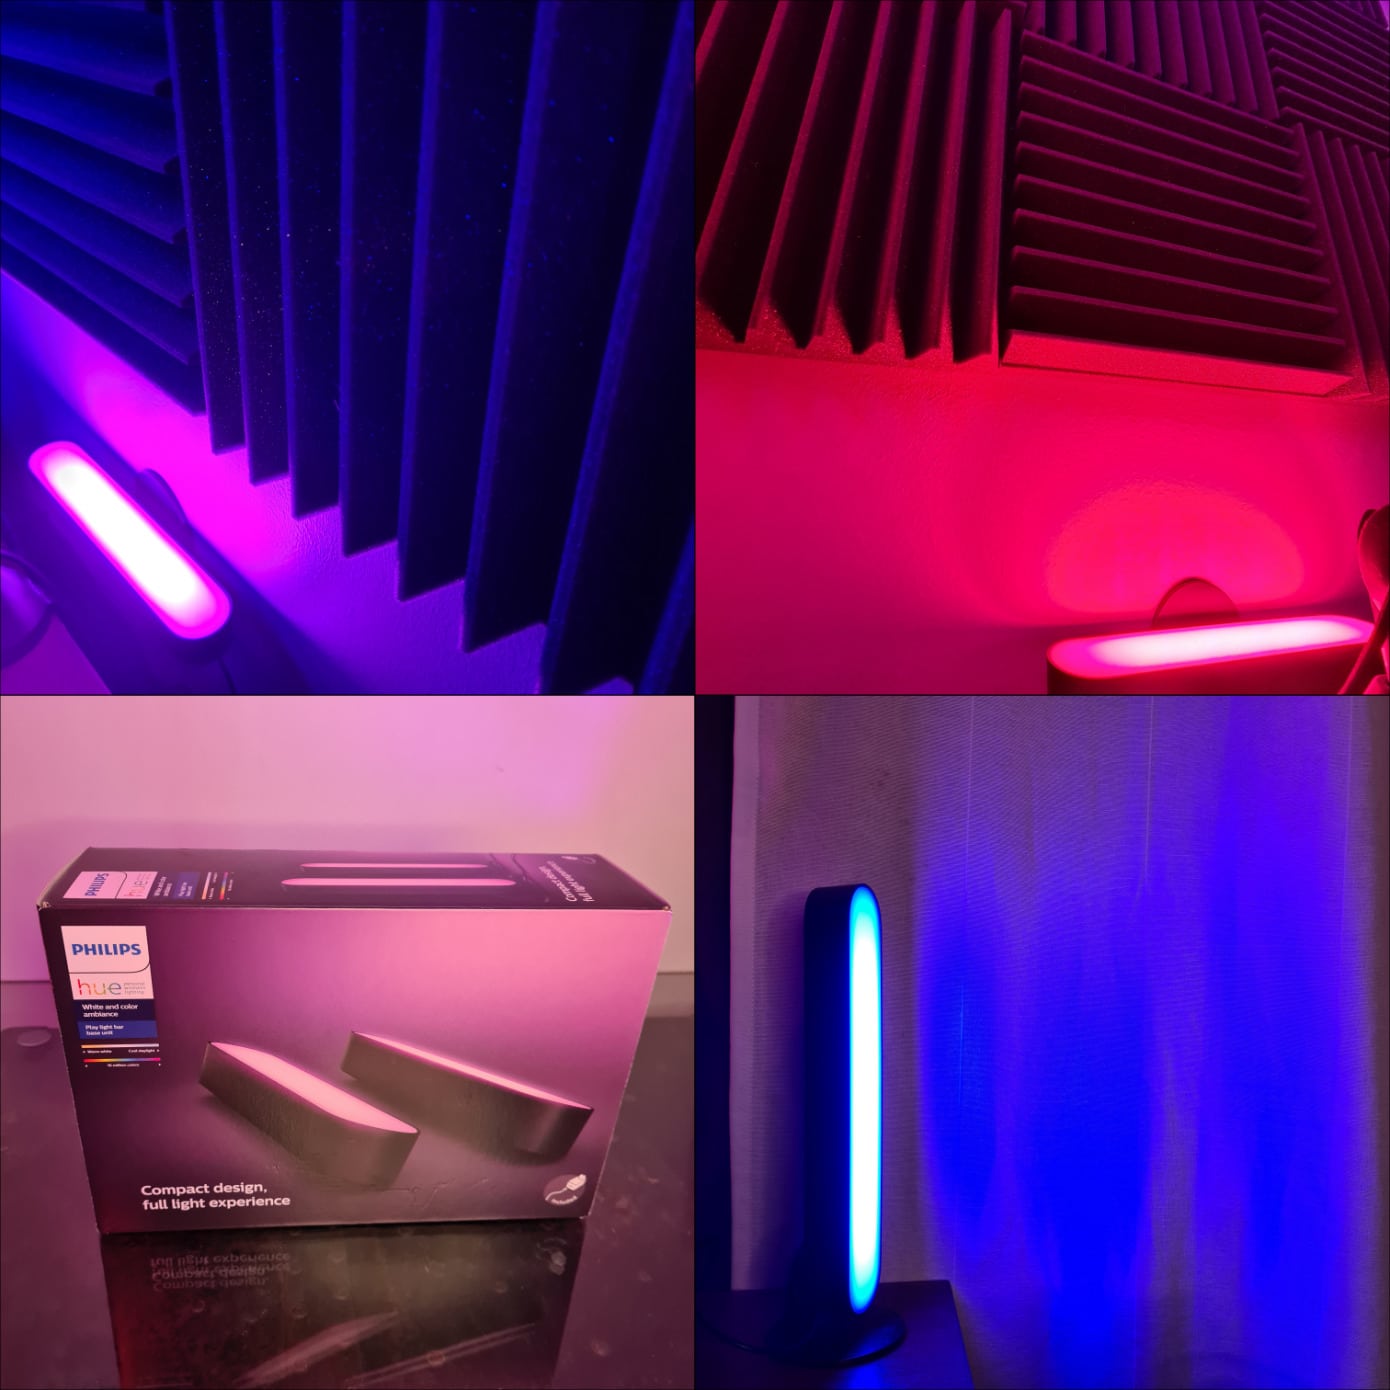 Philips hue light bars